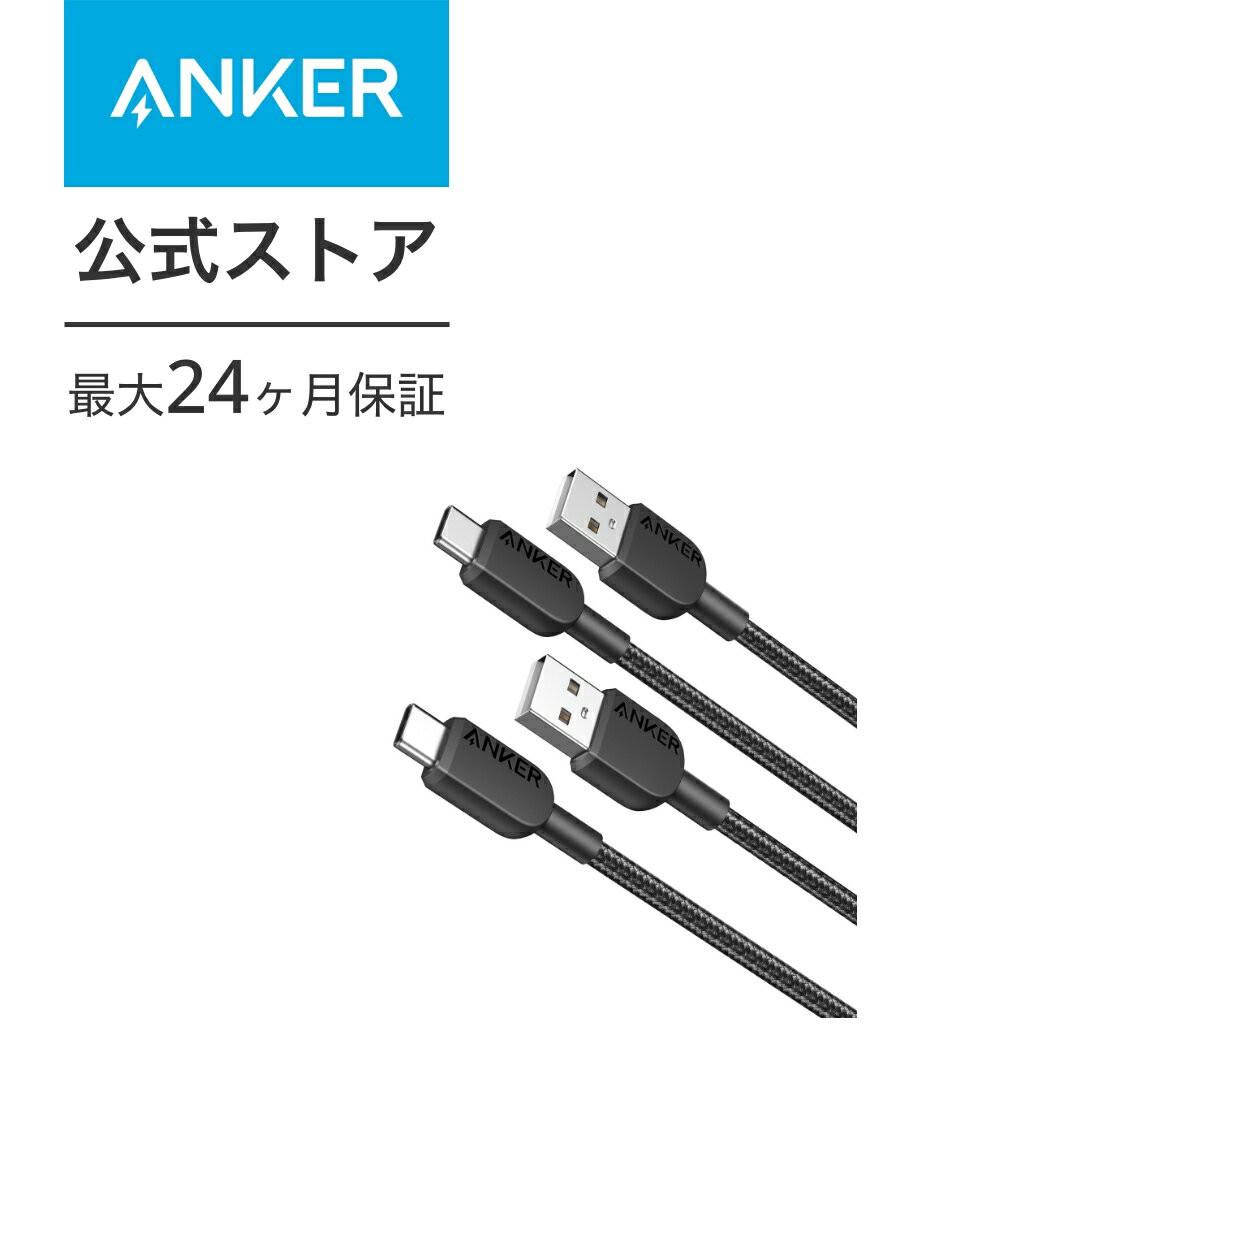 Anker 310 高耐久ナイロン USB-C & USB-A ケーブル USB 2.0 フルスピード充電 Galaxy Note 10 Note 9 / S10+ S10、LG V30各種対応 (0.9m 2本セット)